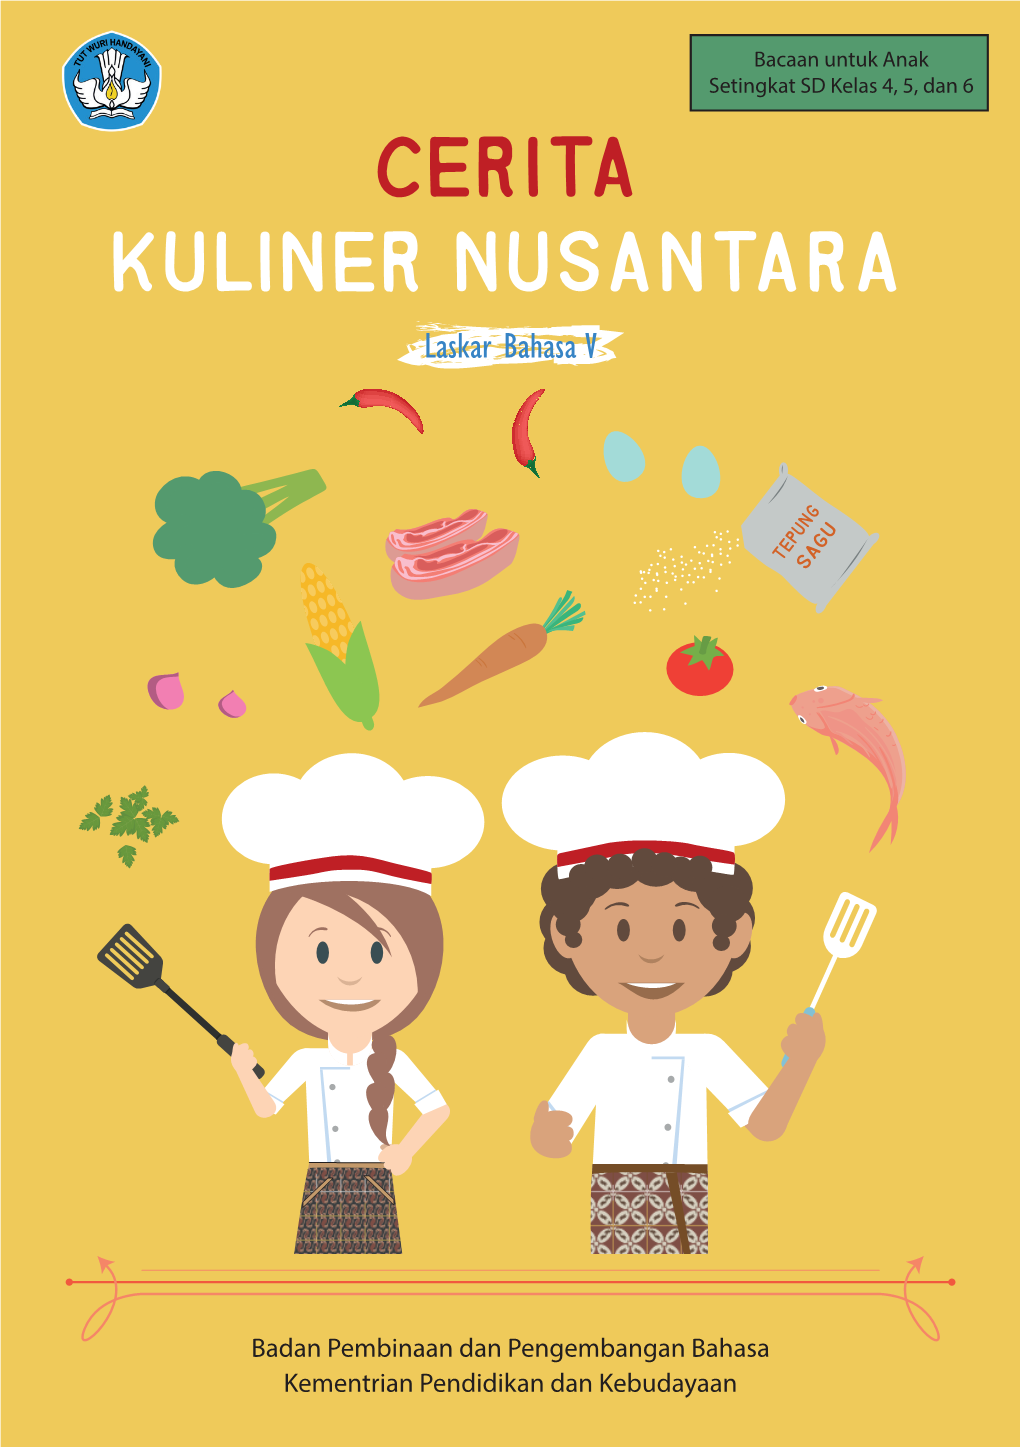 Kuliner Nusantara Cerita